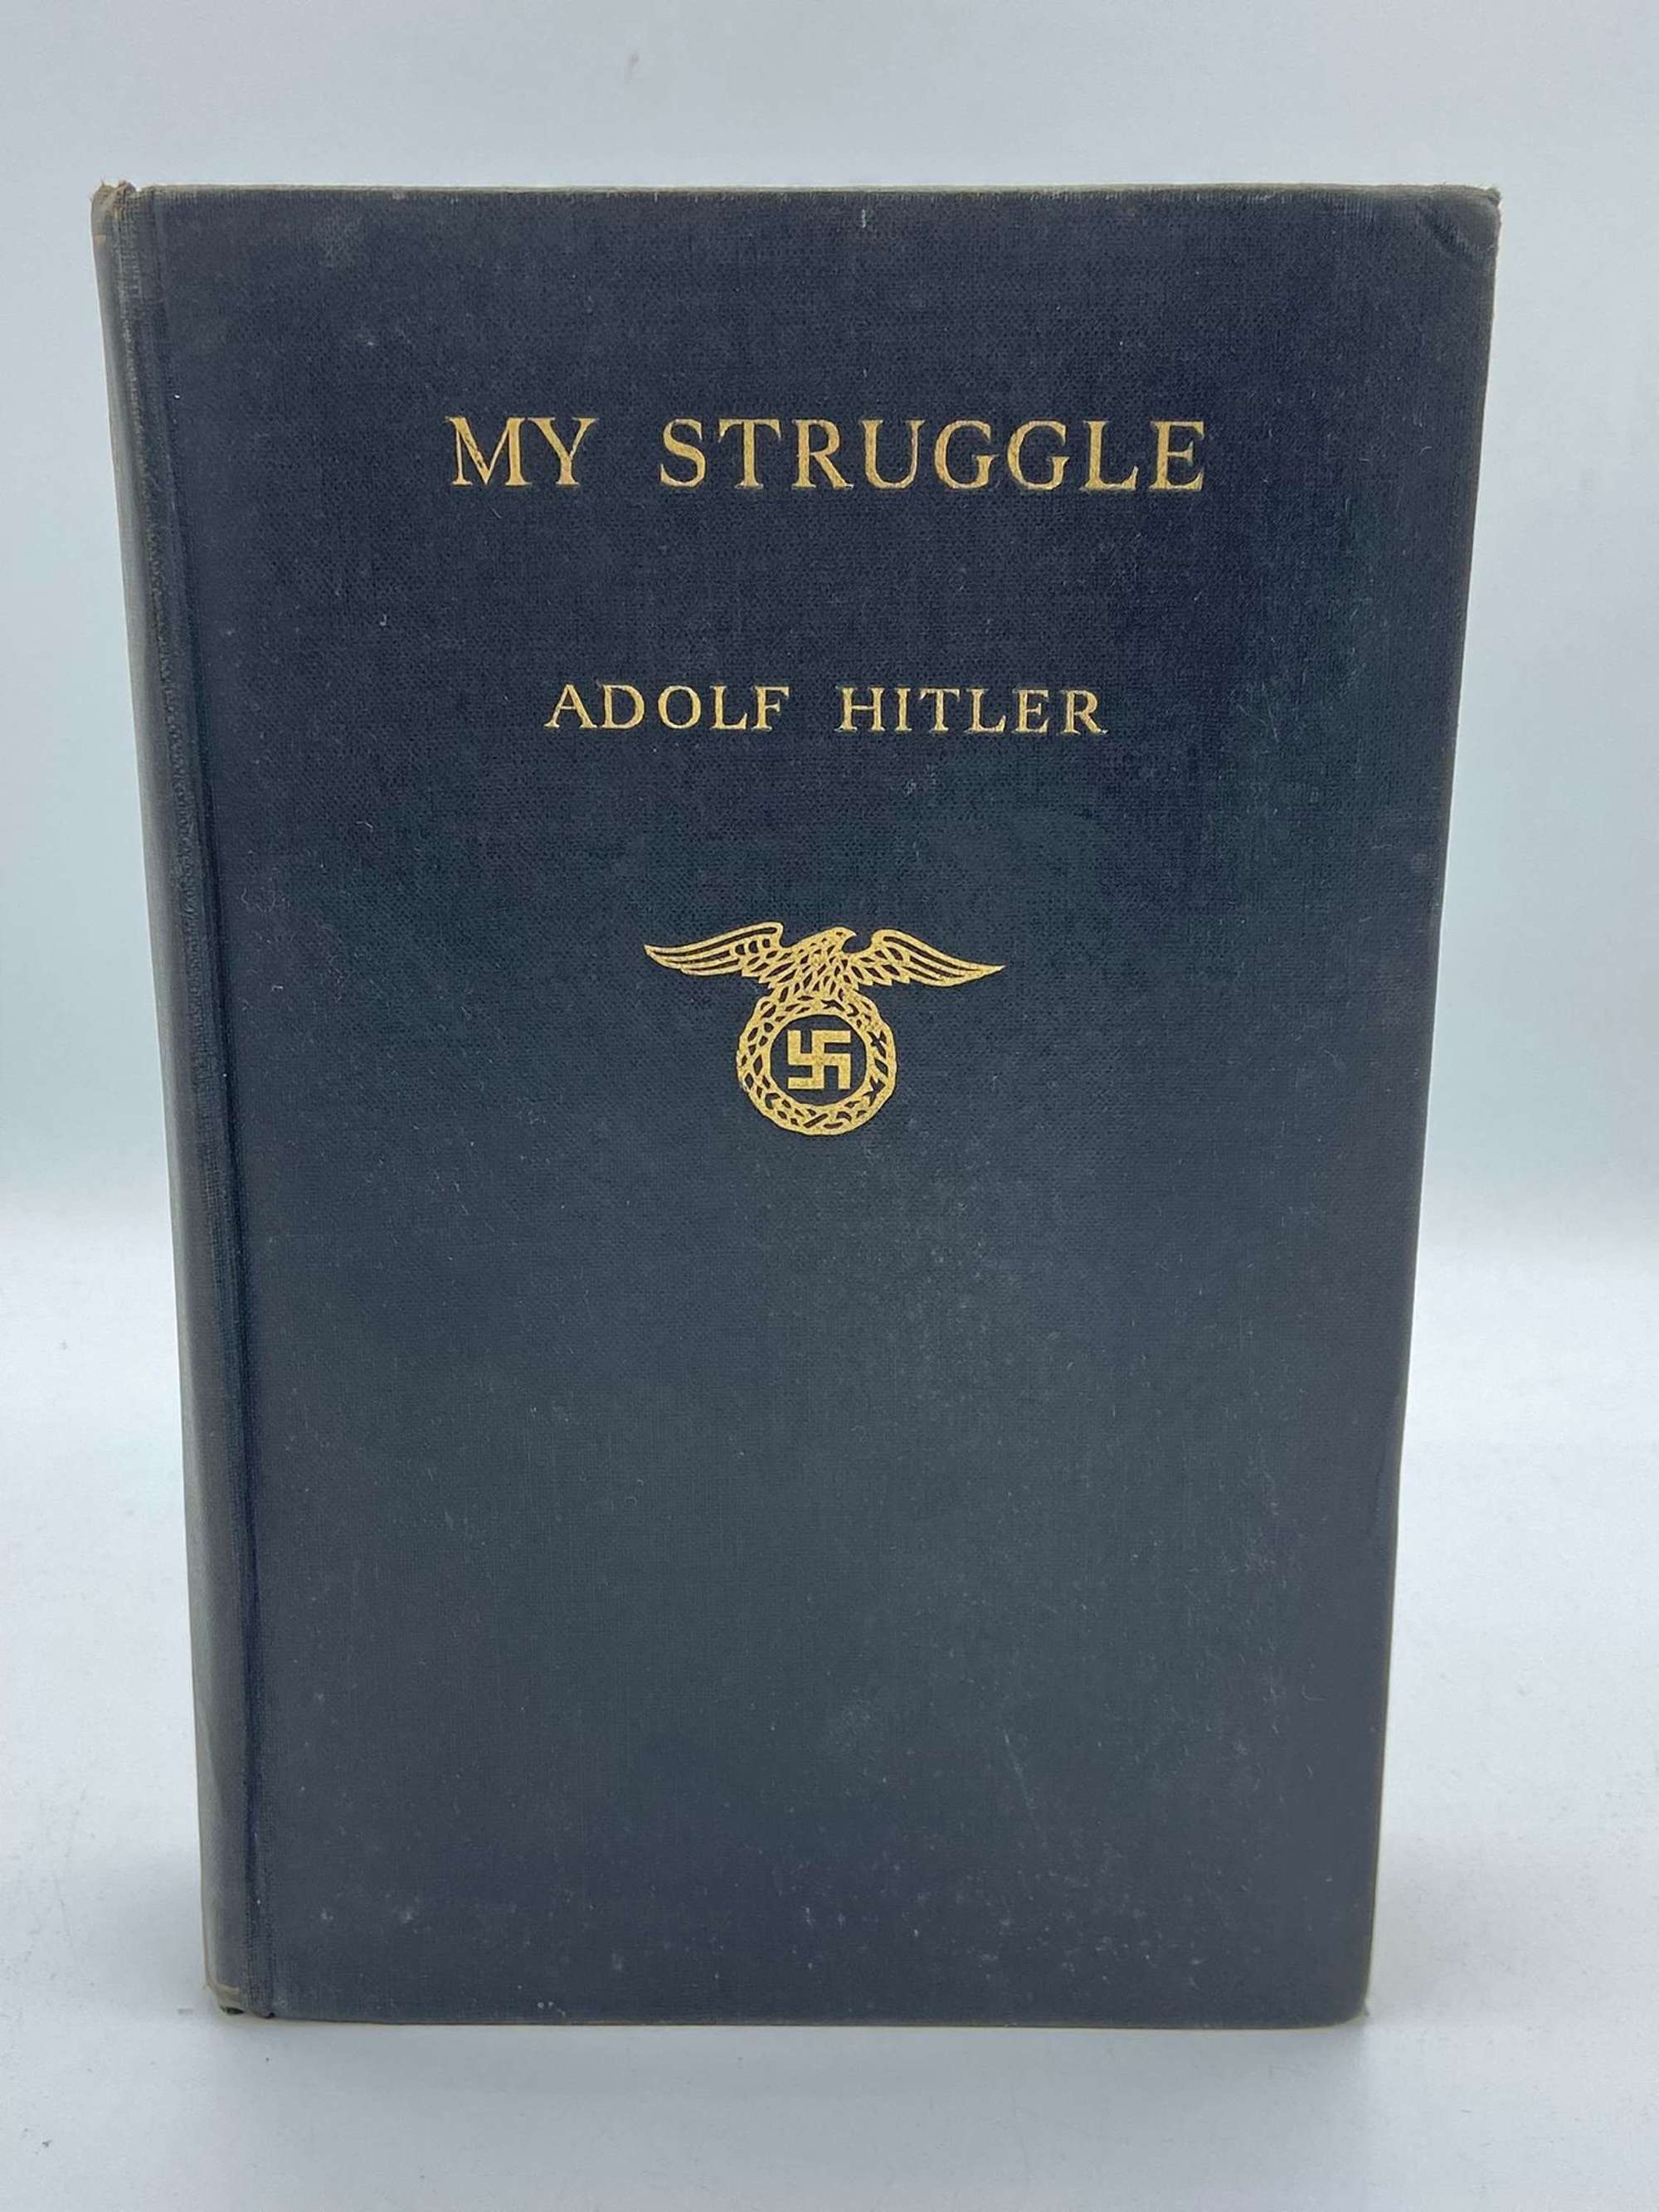 WW2 British 1933 Mein Kampf: My Struggle by Adolf Hitler 1st Edition